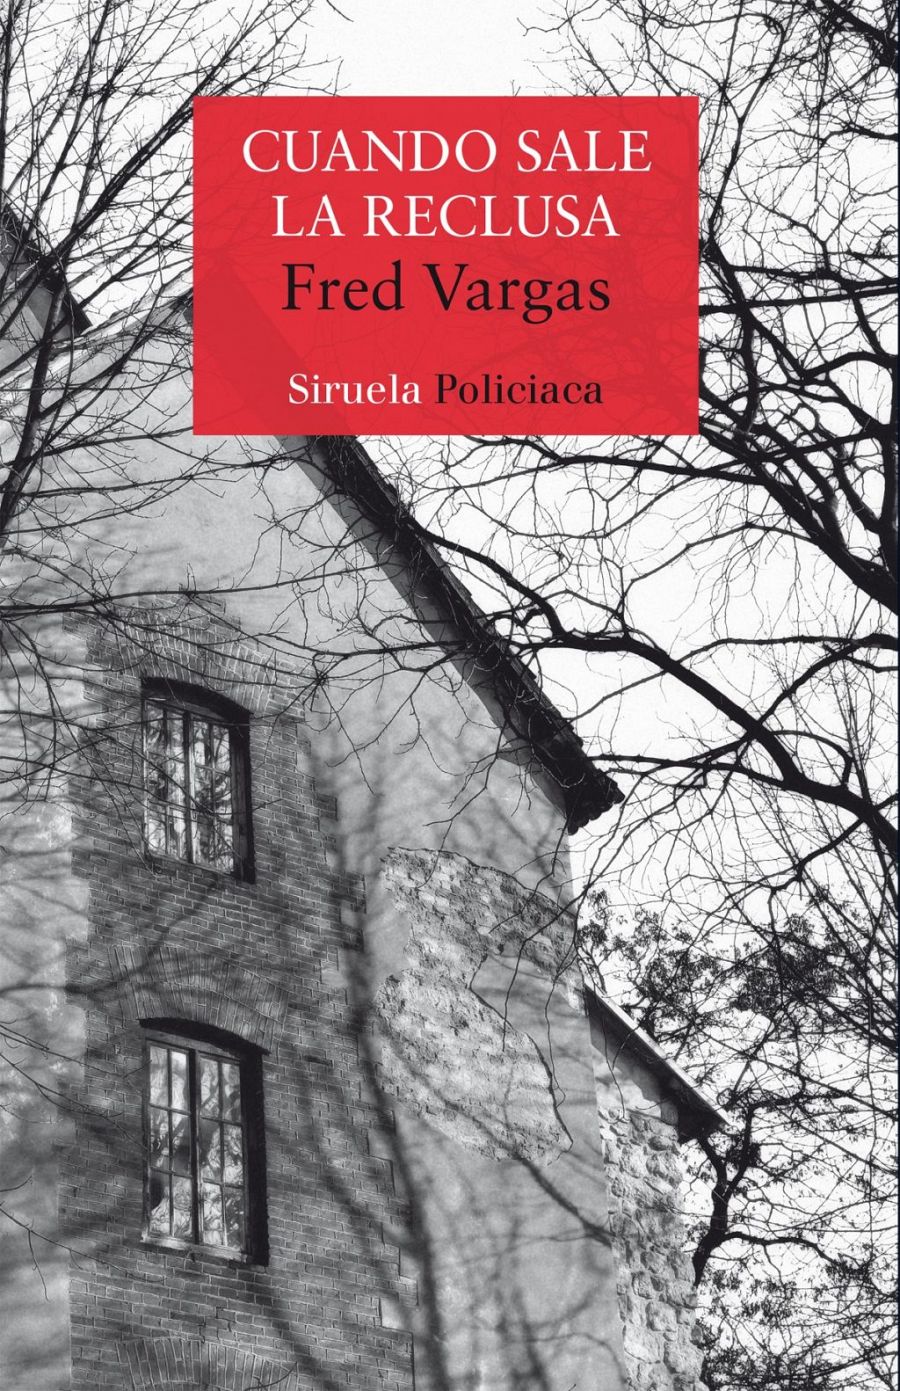  Fred Vargas, 